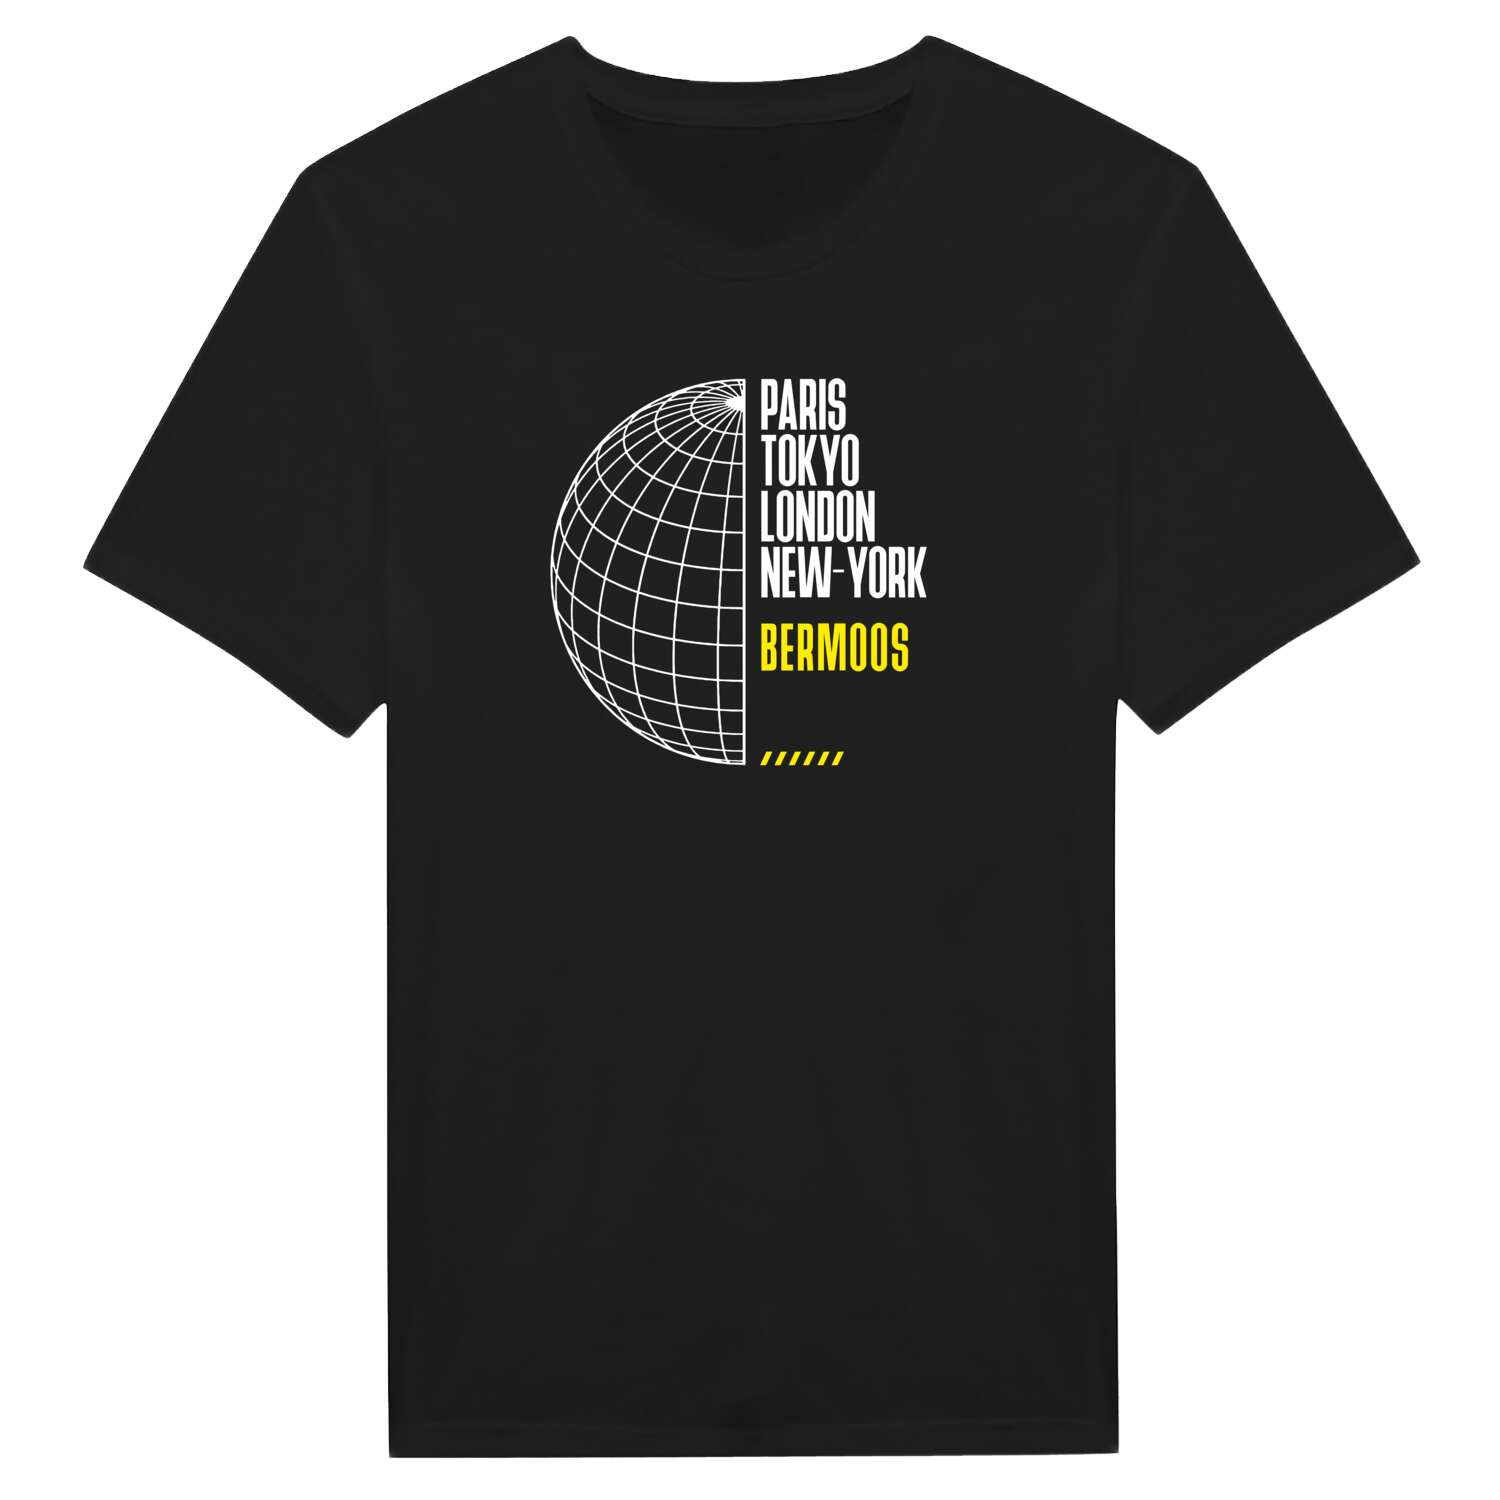 Bermoos T-Shirt »Paris Tokyo London«